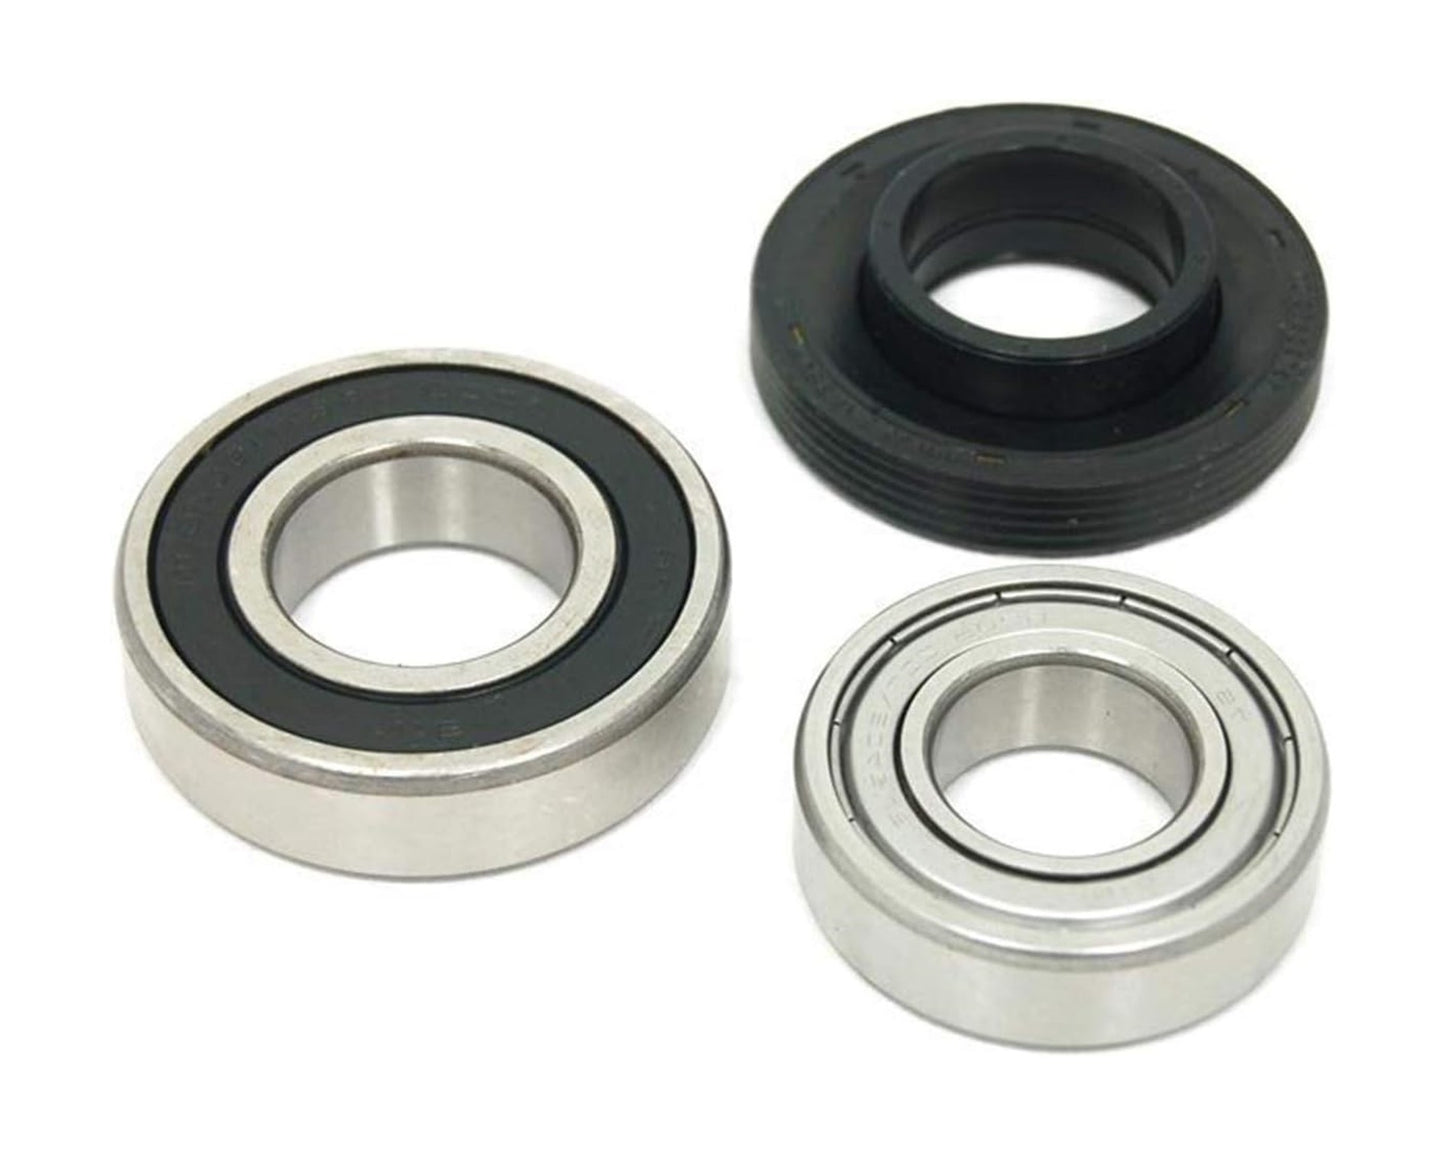 30mm Replacement Bearing & Seal Kit for Hotpoint Creda Ariston - C00254590, C00202544